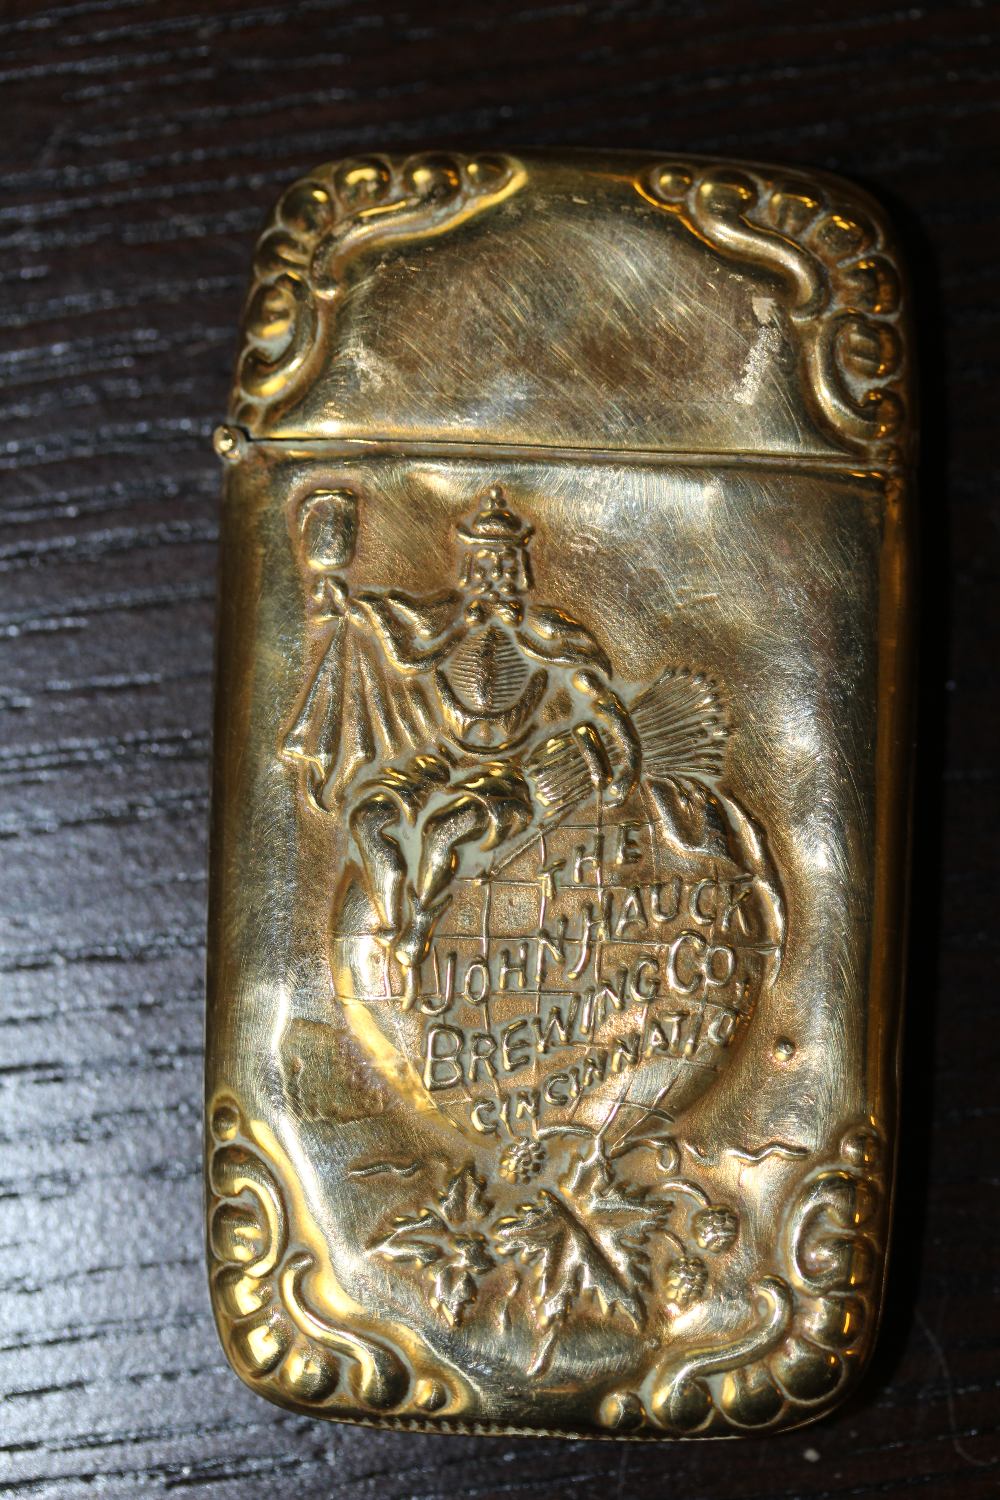 Late 19th Century American embossed brass vesta case worded 'The John Hauck Brewing Co. Cincinnati'